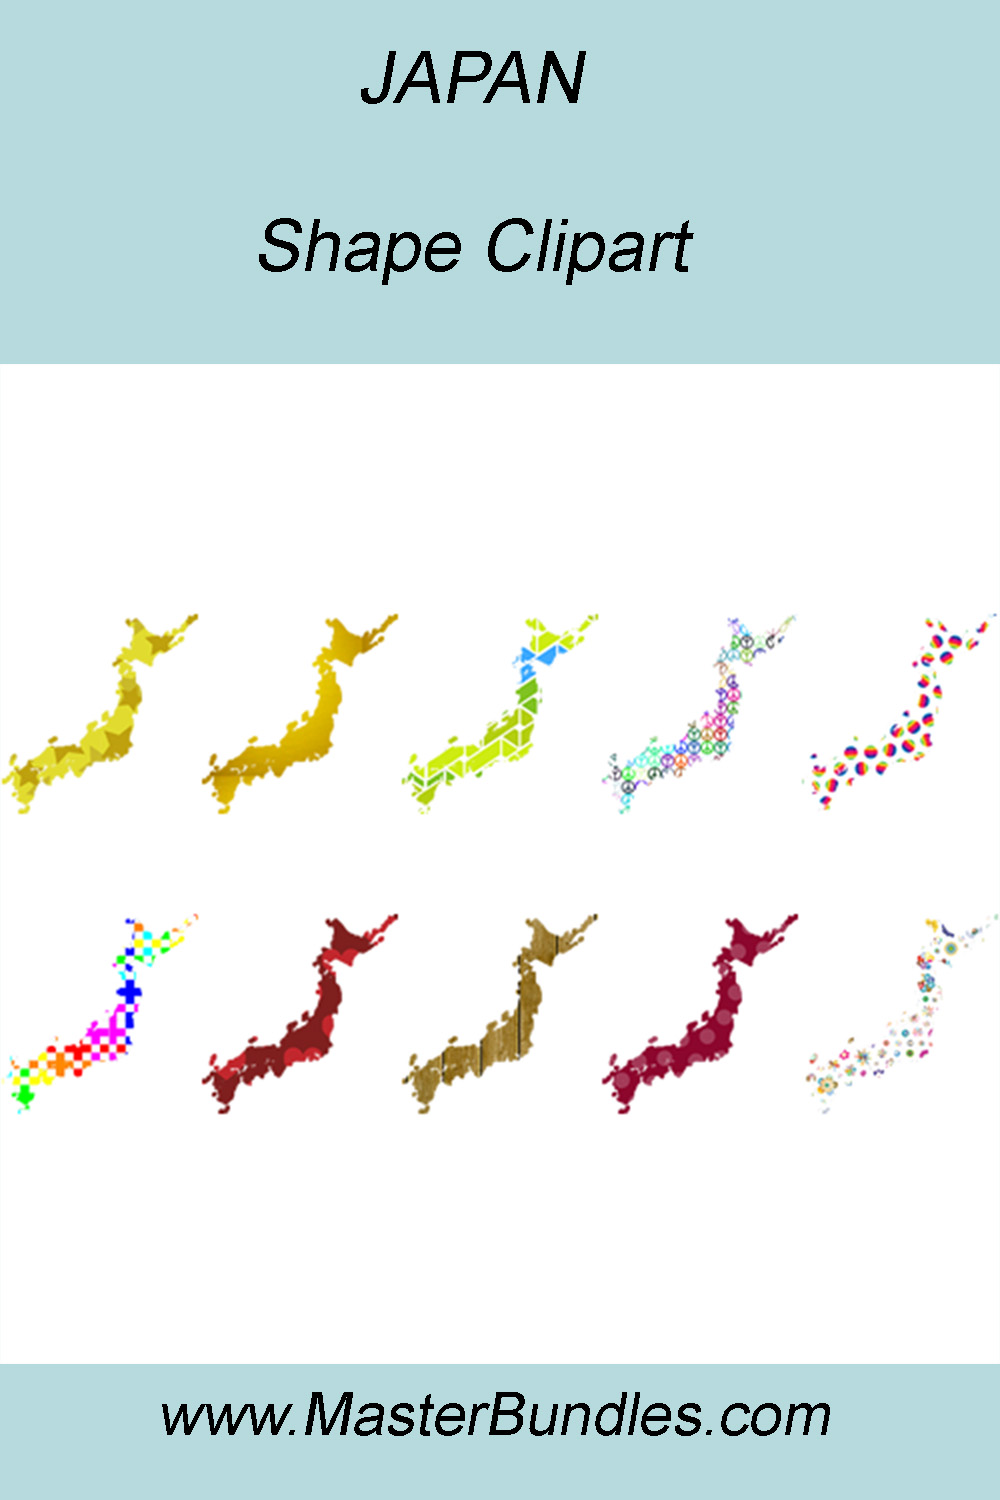 JAPAN SHAPE CLIPART ICONS pinterest preview image.